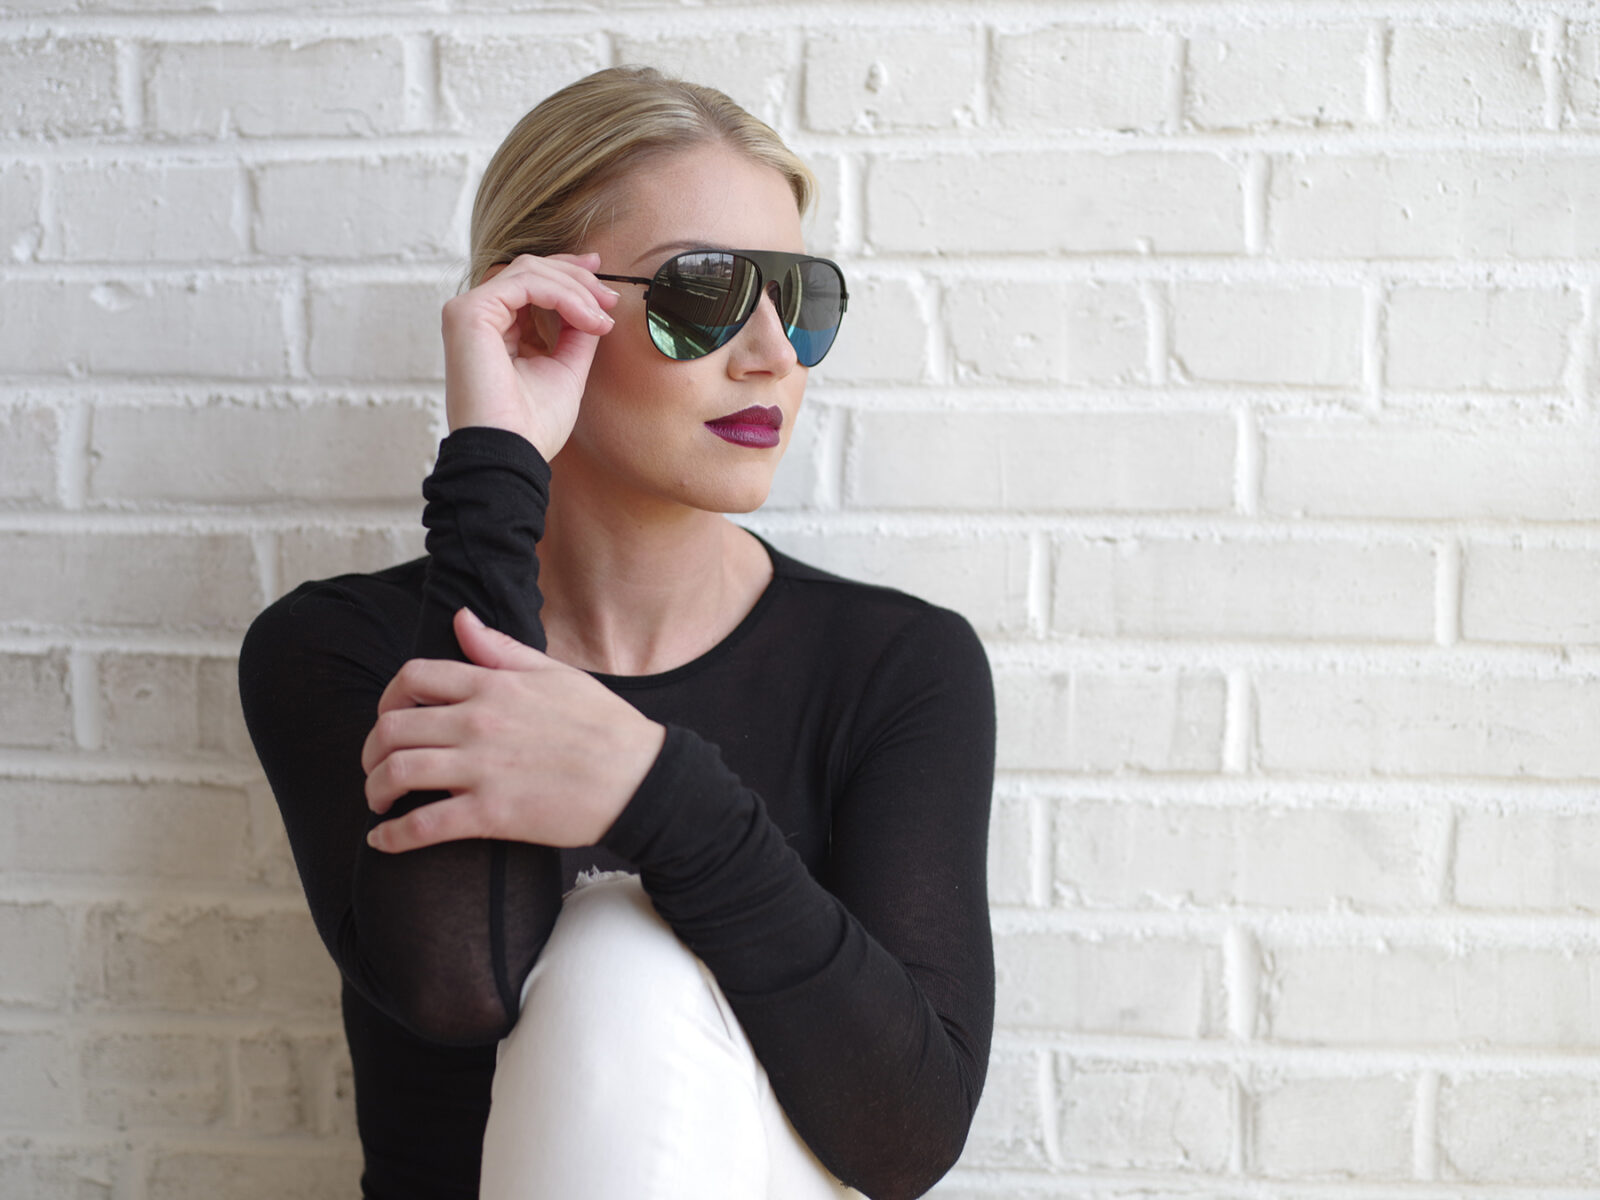 Vuliwear Designer Sunglasses Italy Exclusive Essilor Eyewear Eyeglasses